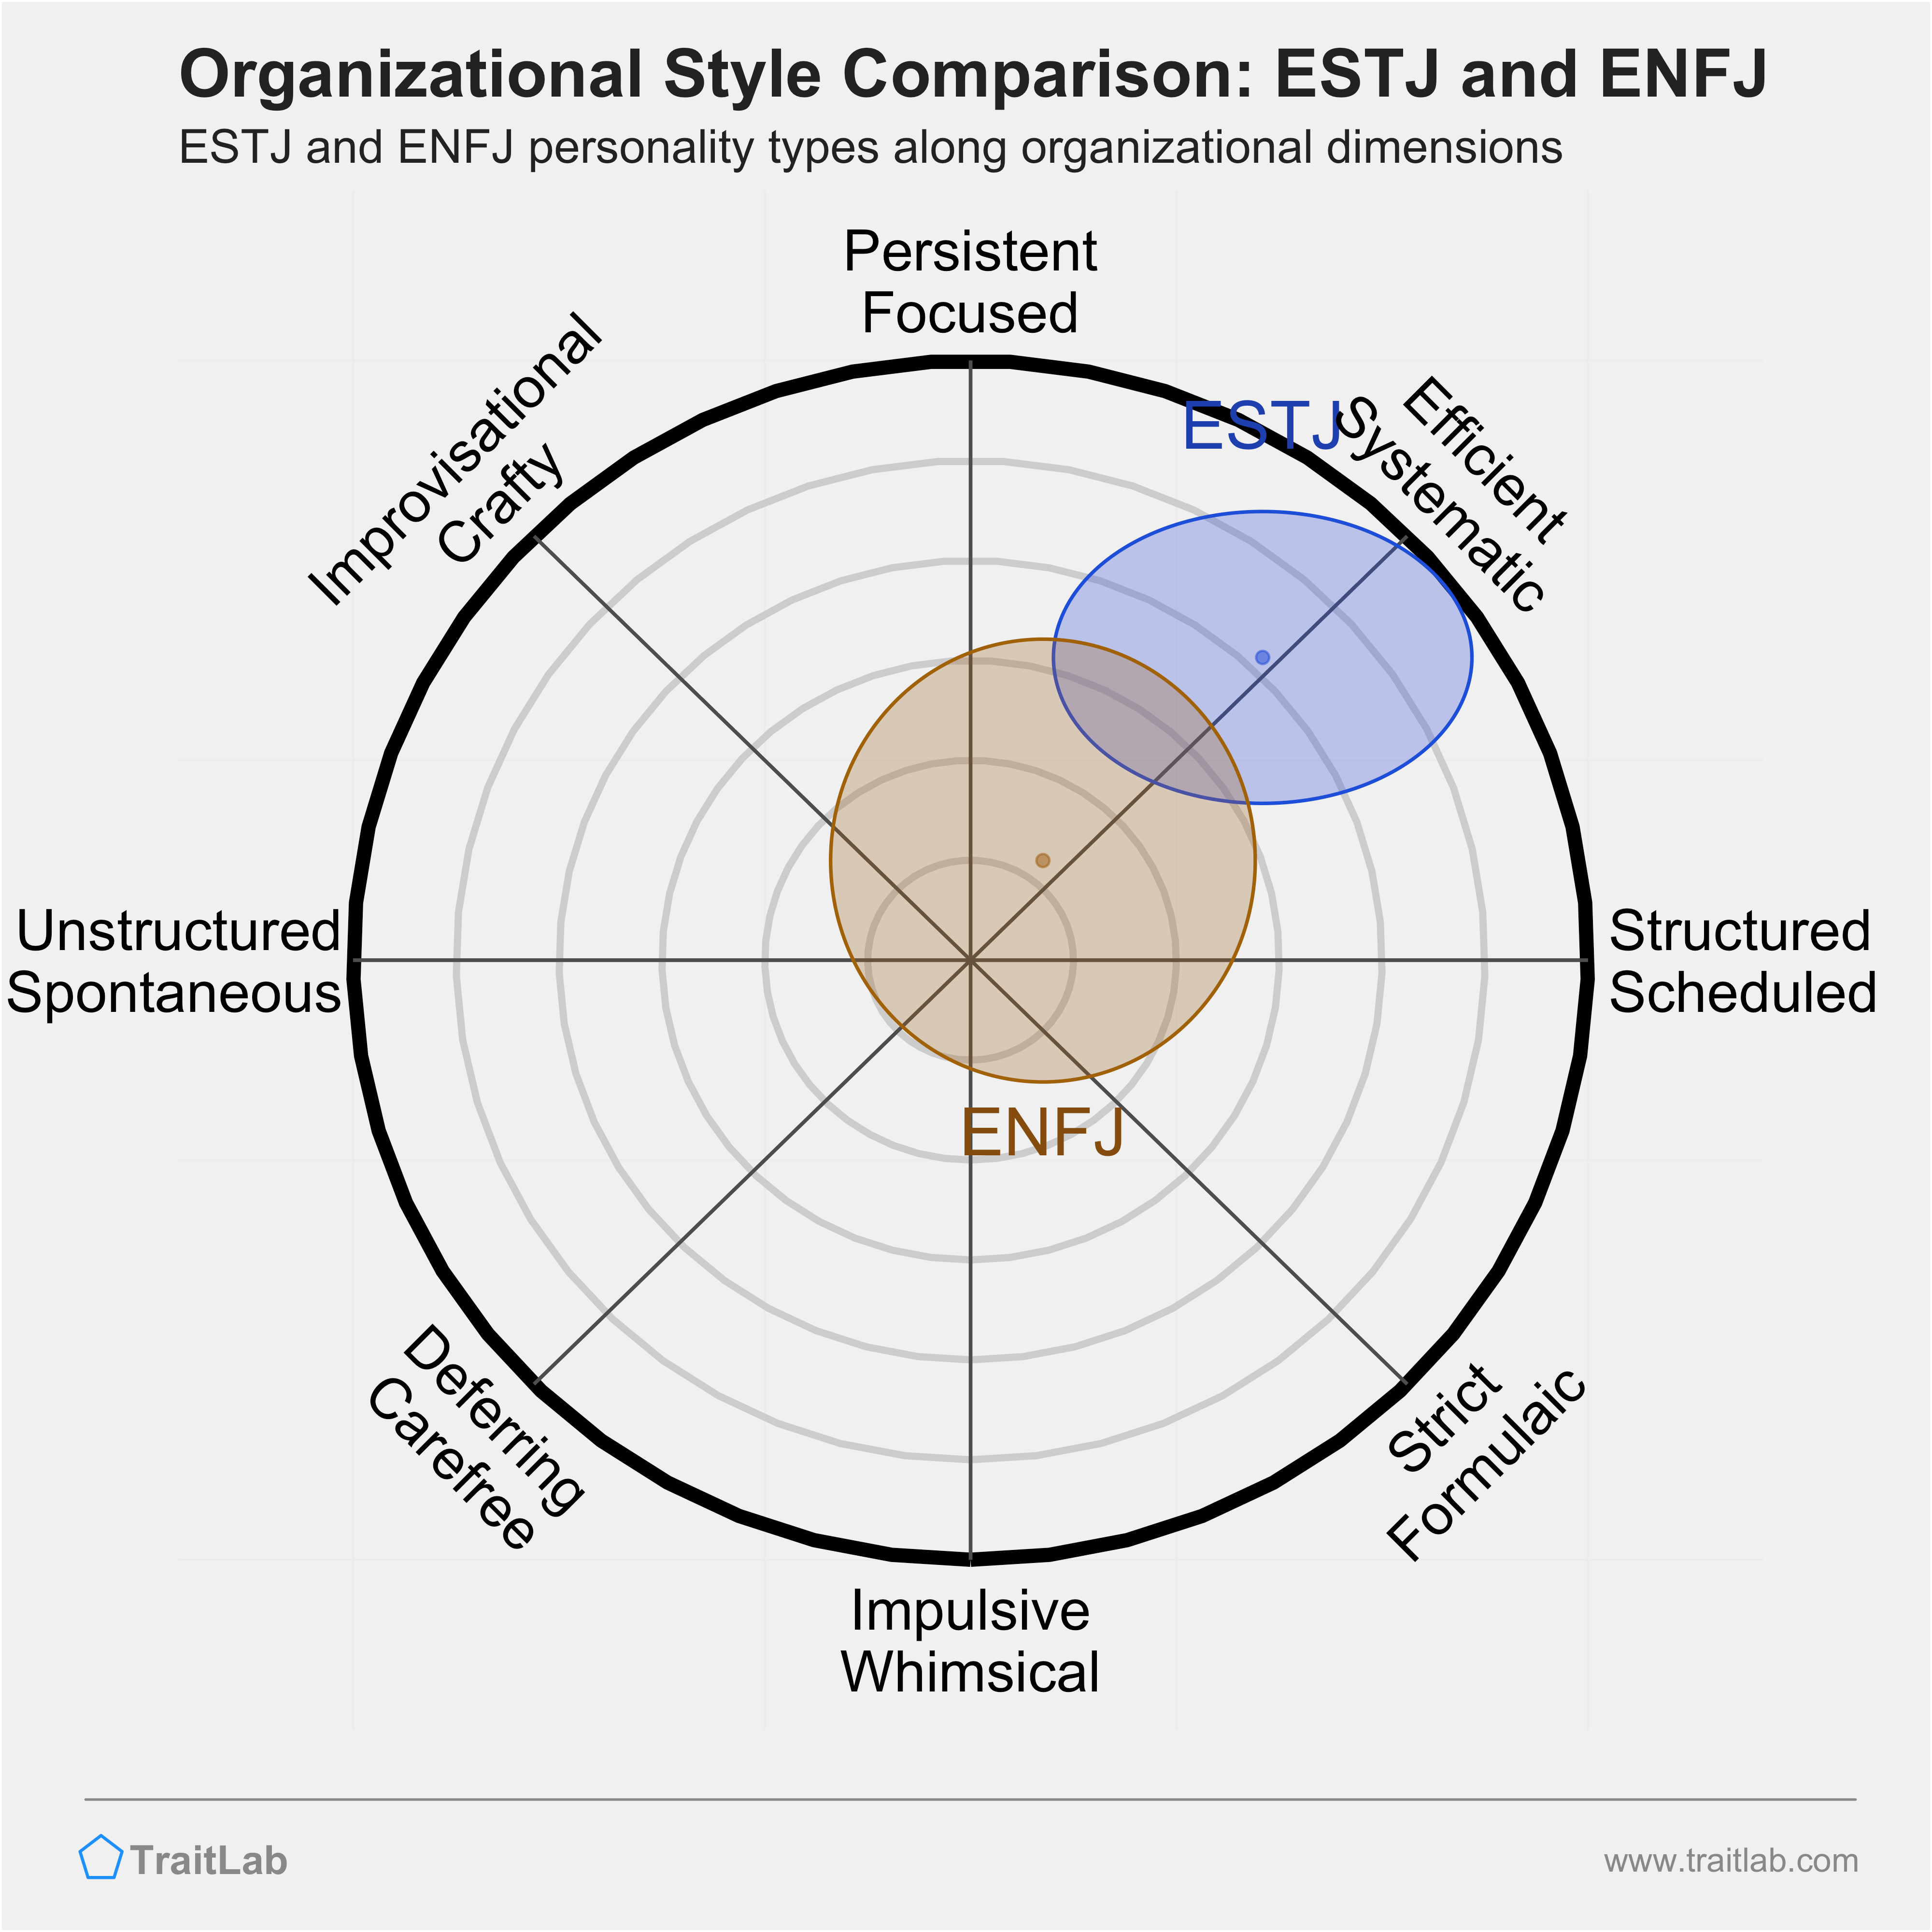 ESTJ and ENFJ comparison across organizational dimensions